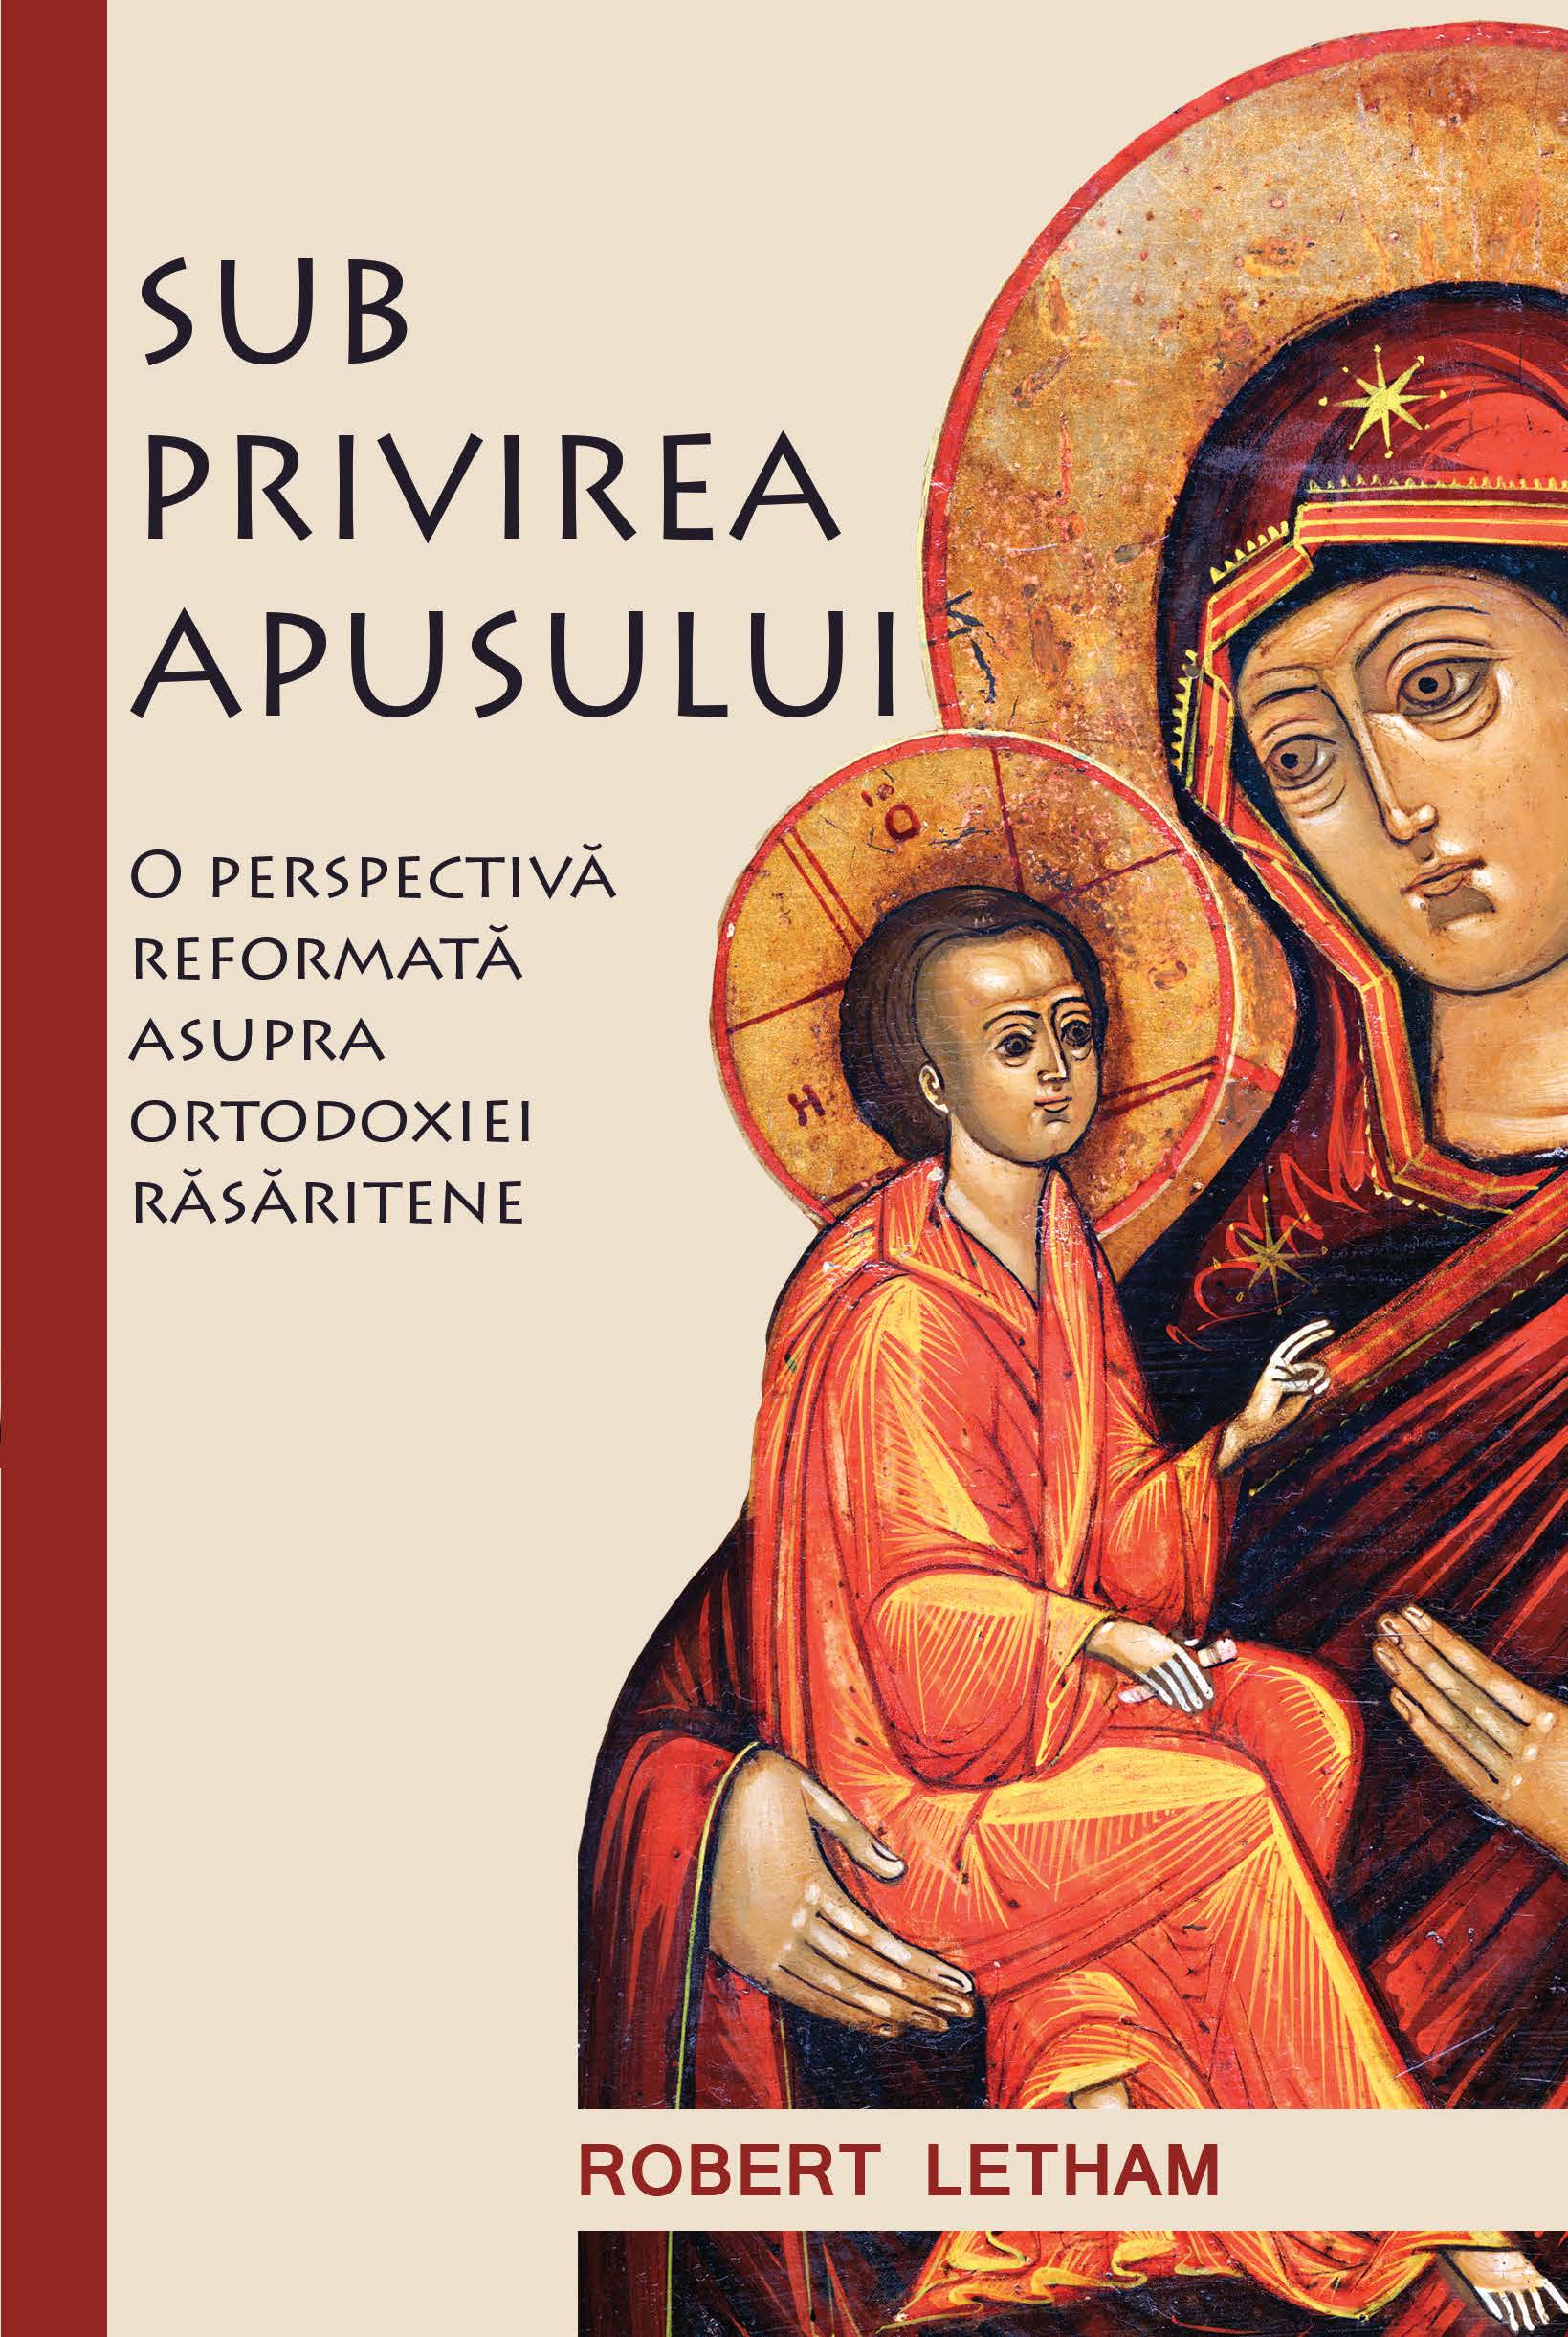 SUB PRIVIREA APUSULUI - O perspectiva reformata asupra ortodoxiei rasaritene